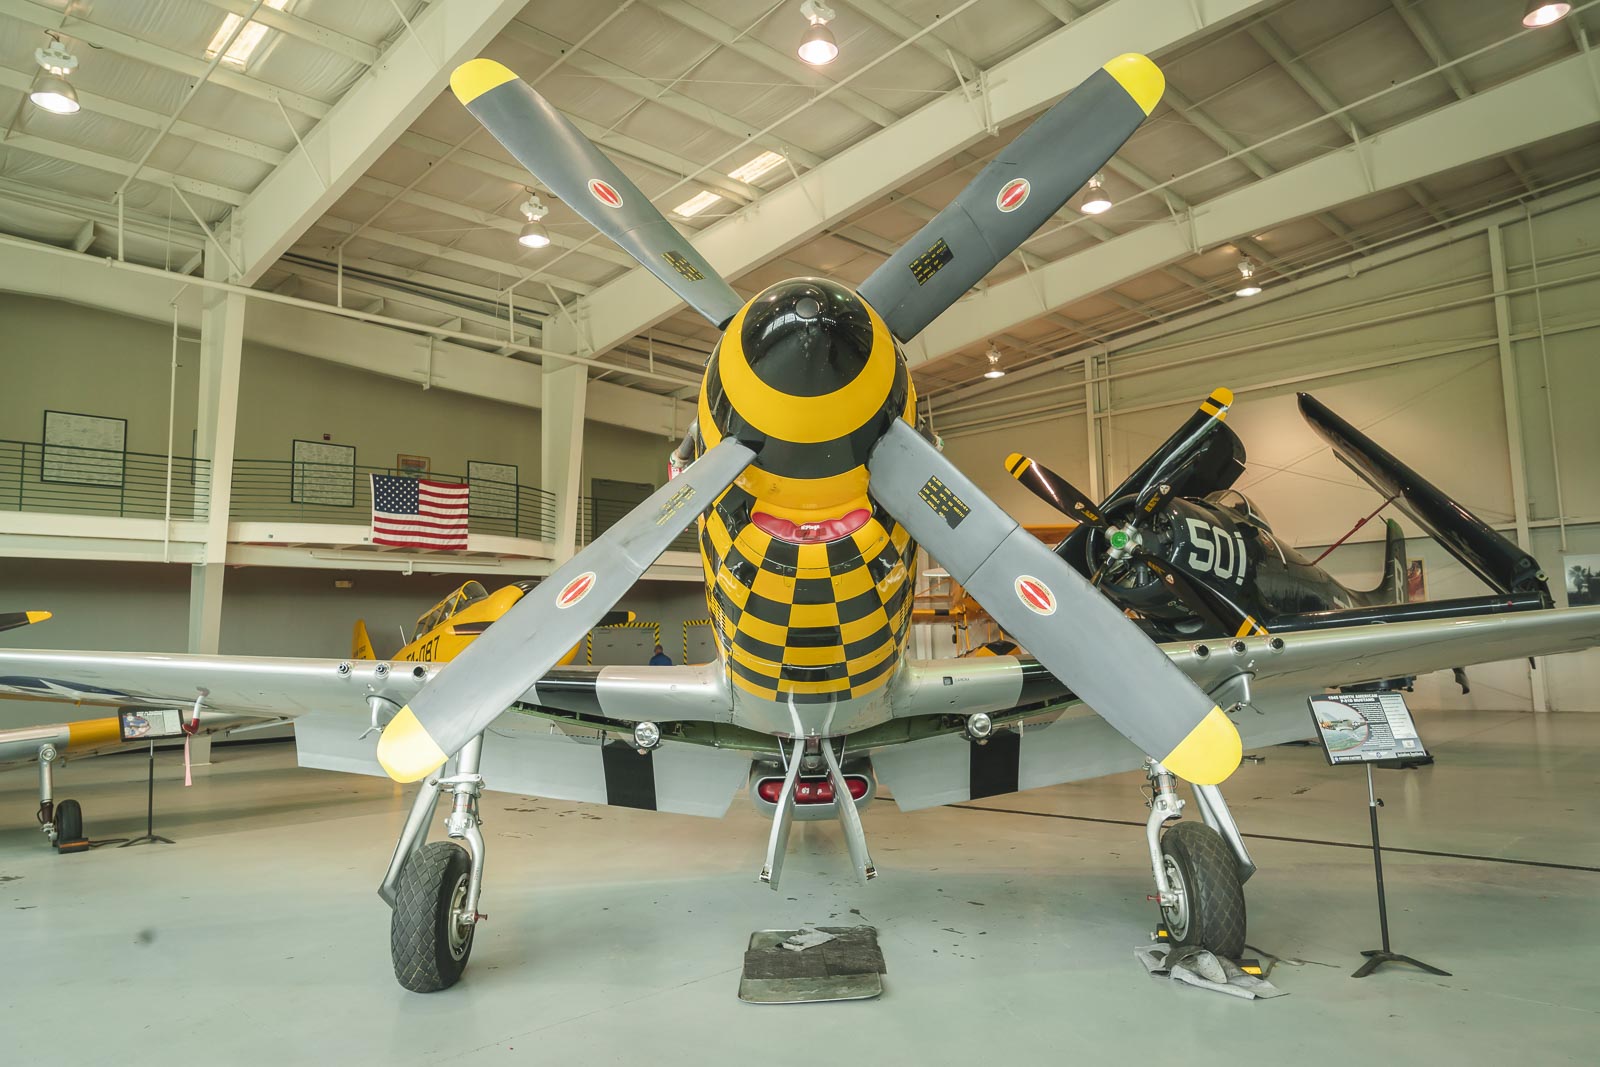 Visit the Military Aviation Museum in Virginia Beach